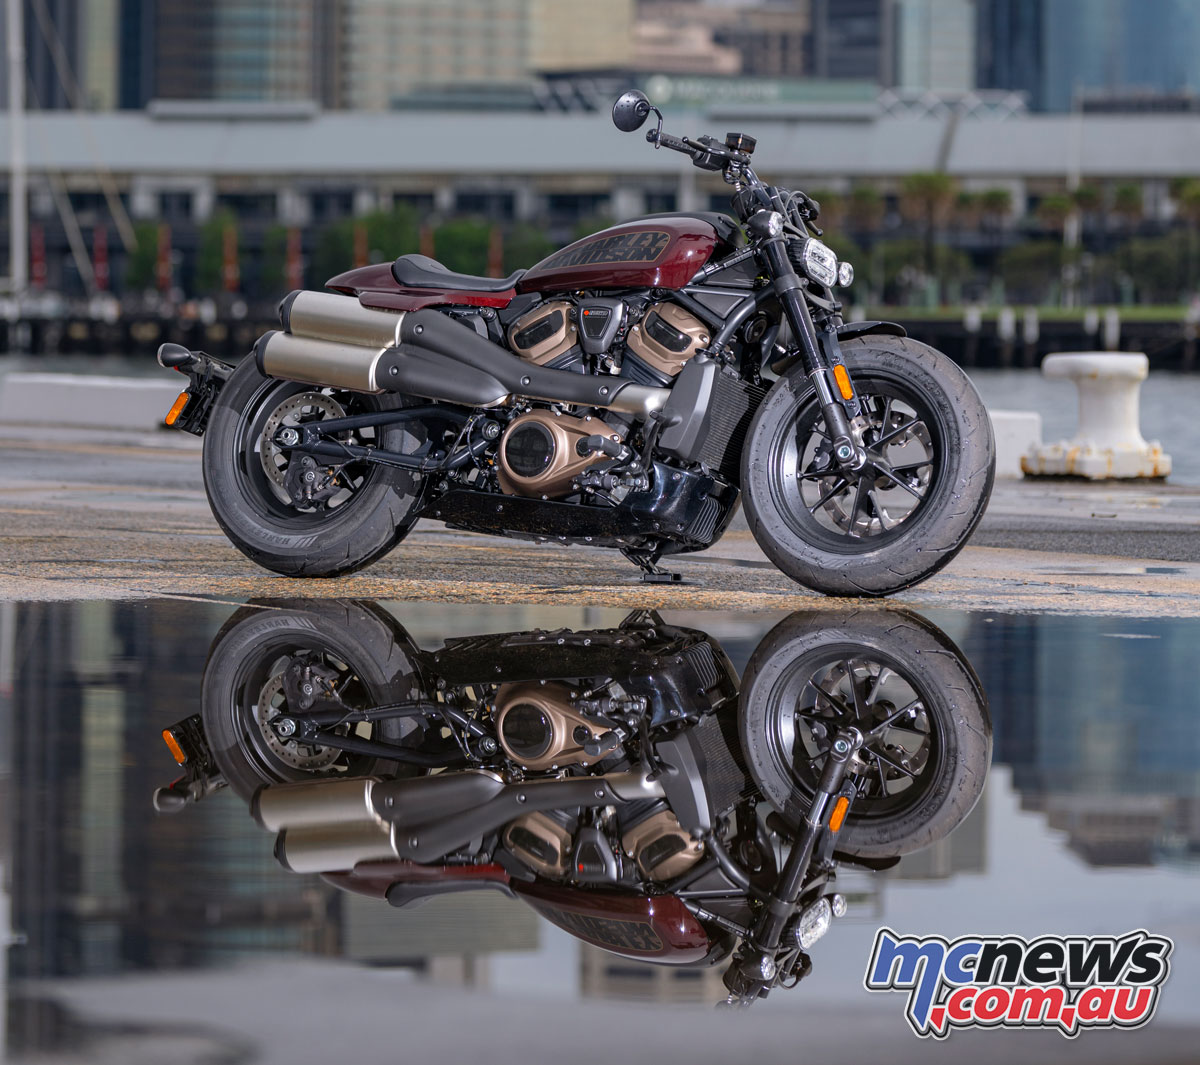 Harley-Davidson Sportster S Name and Details Revealed